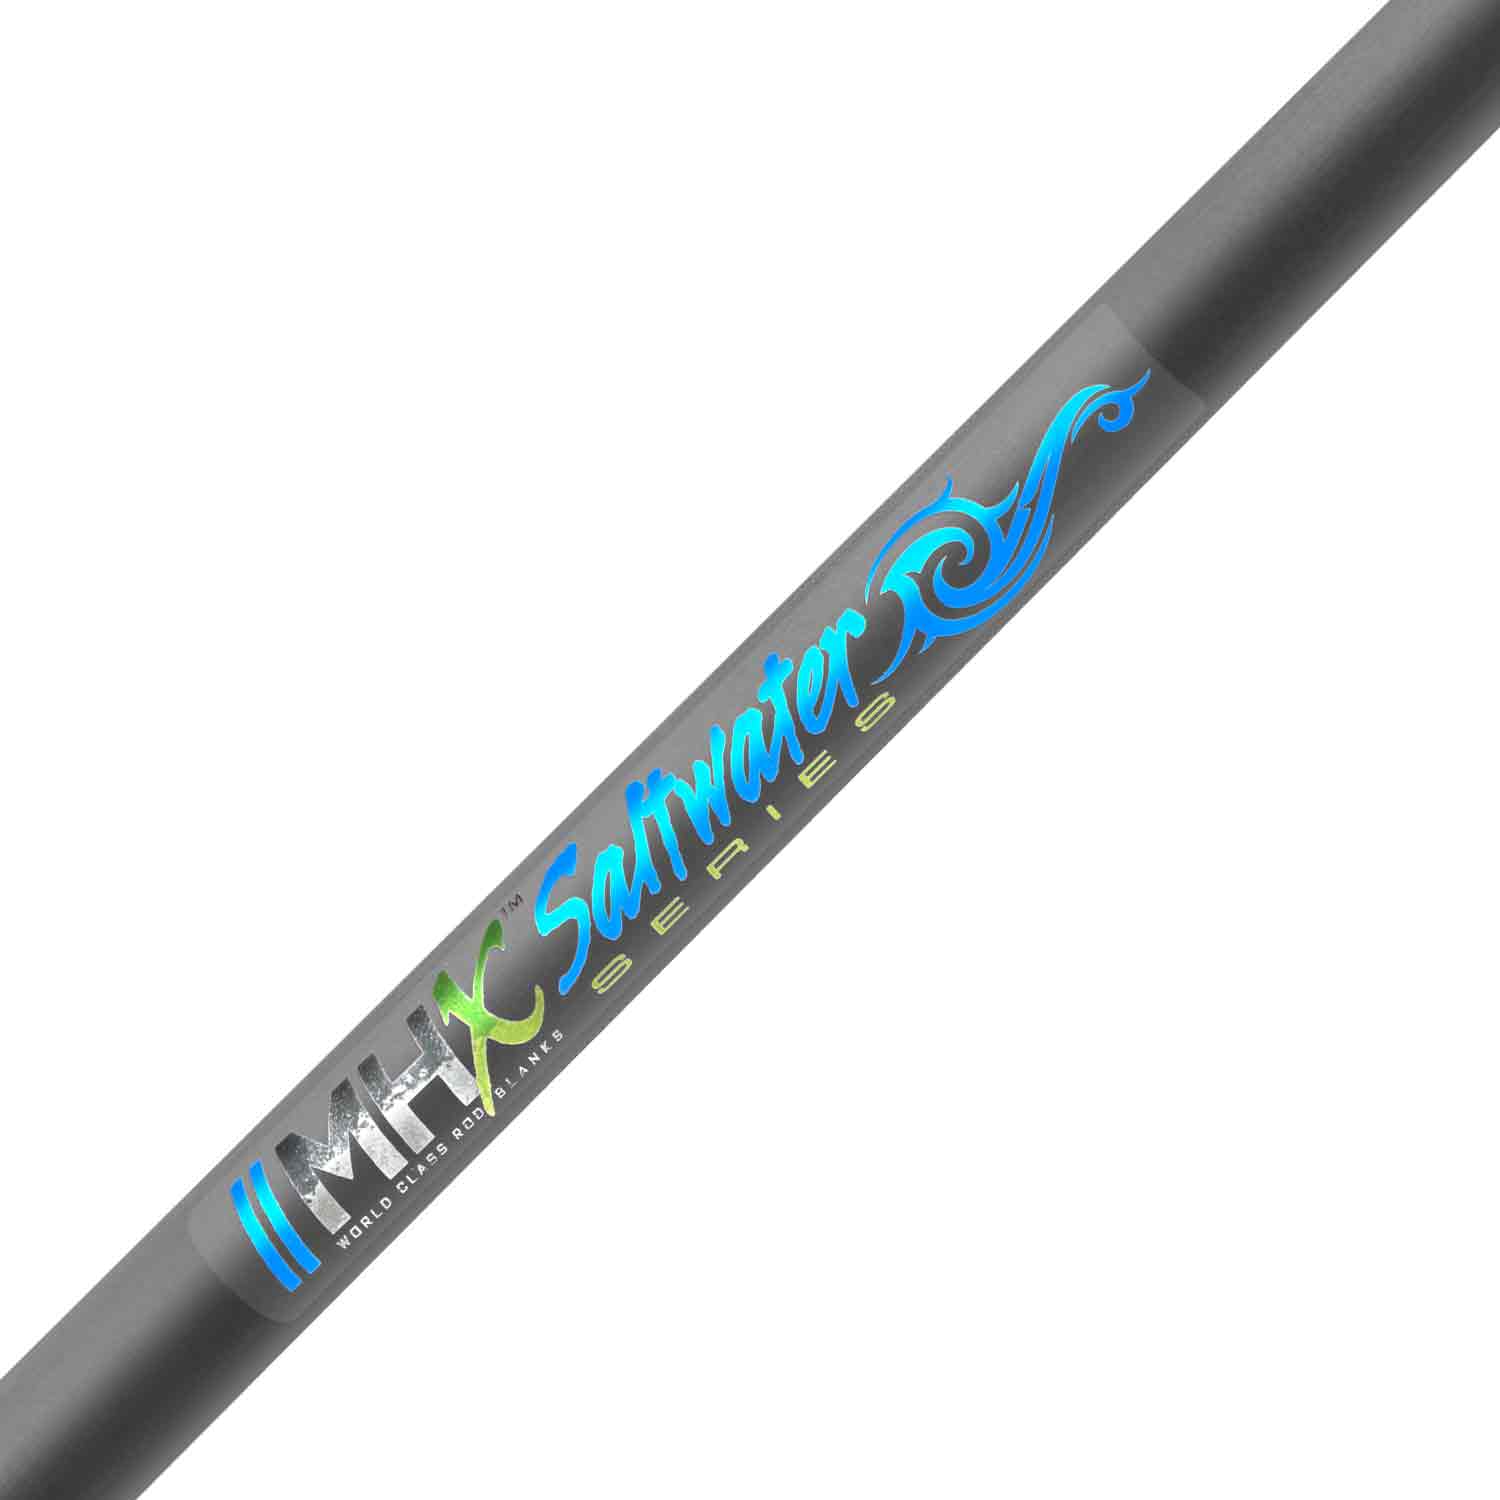 MHX 7'0 Medium Composite Saltwater Rod Blank - GFC84M